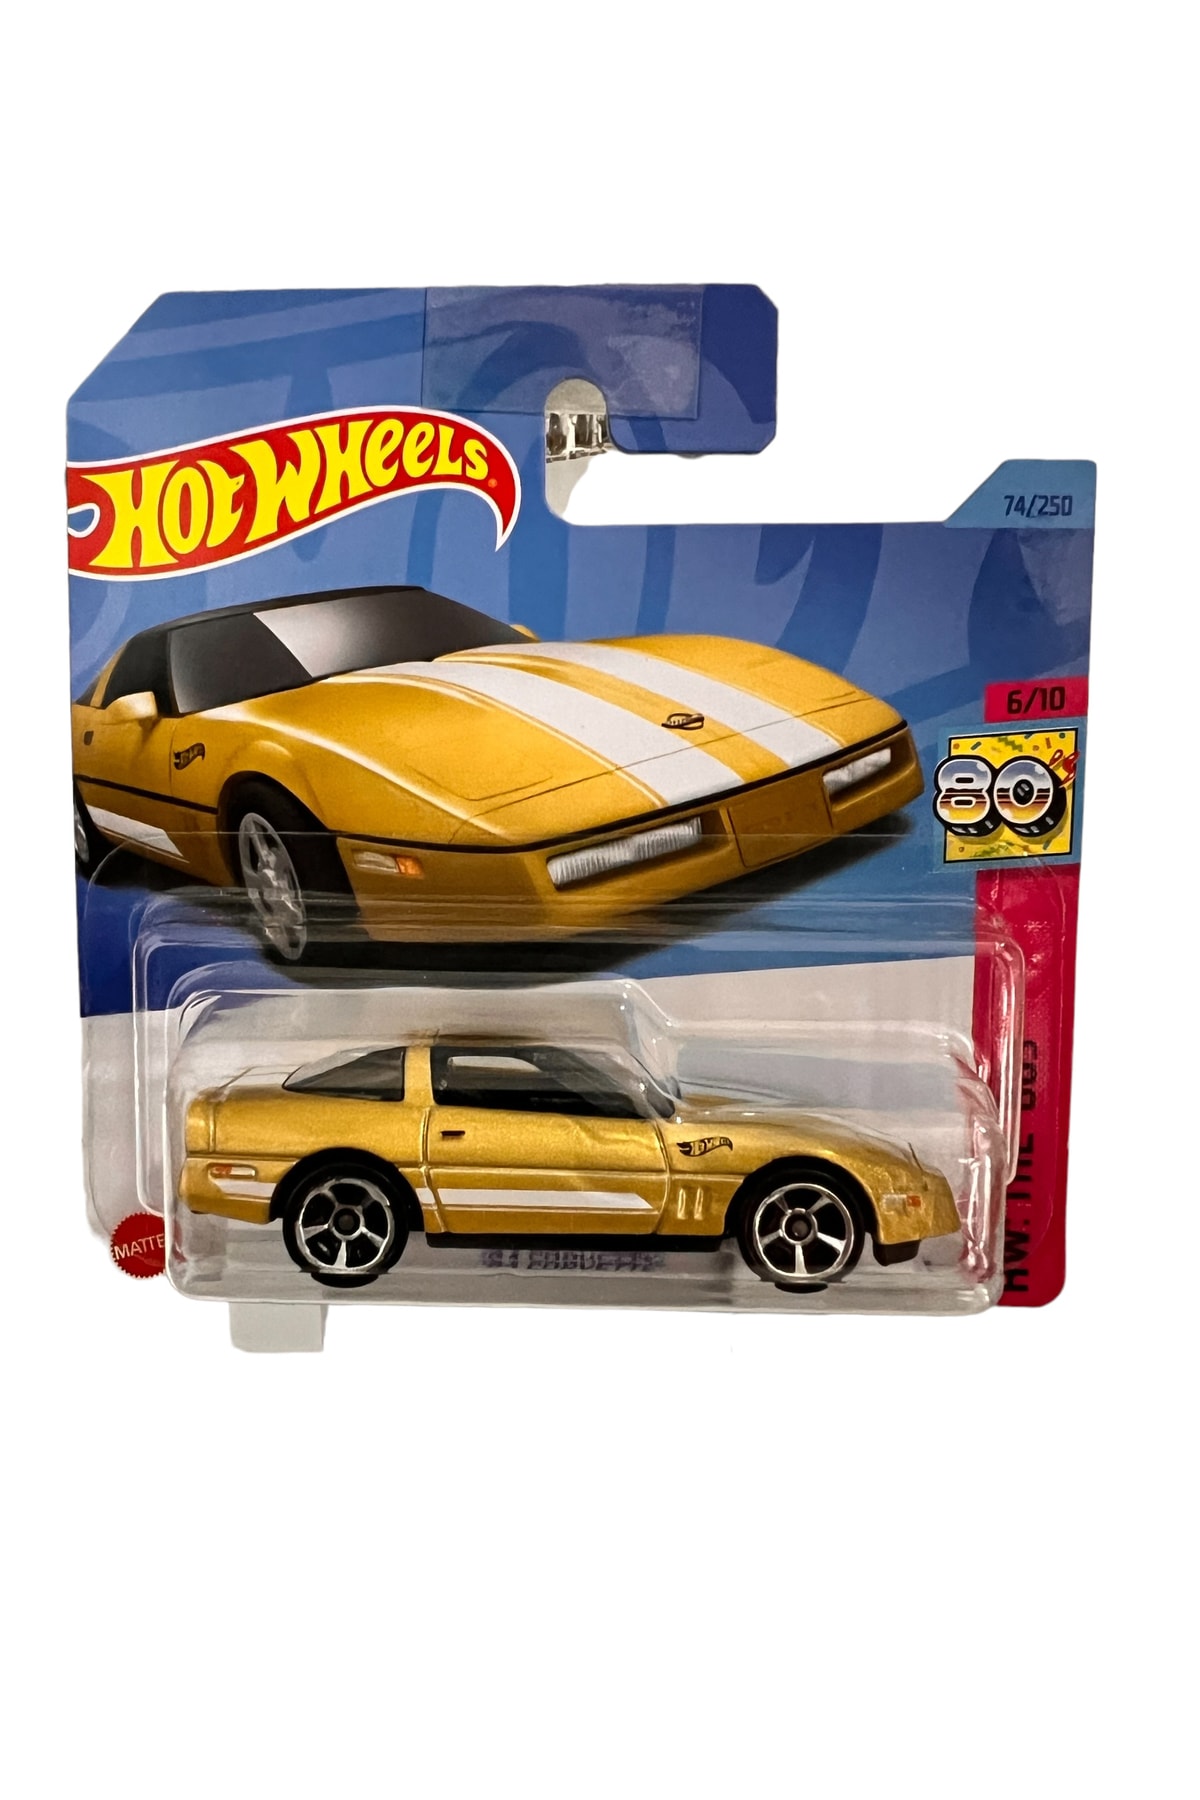 HOT WHEELS 84’ Corvette ( Gold )